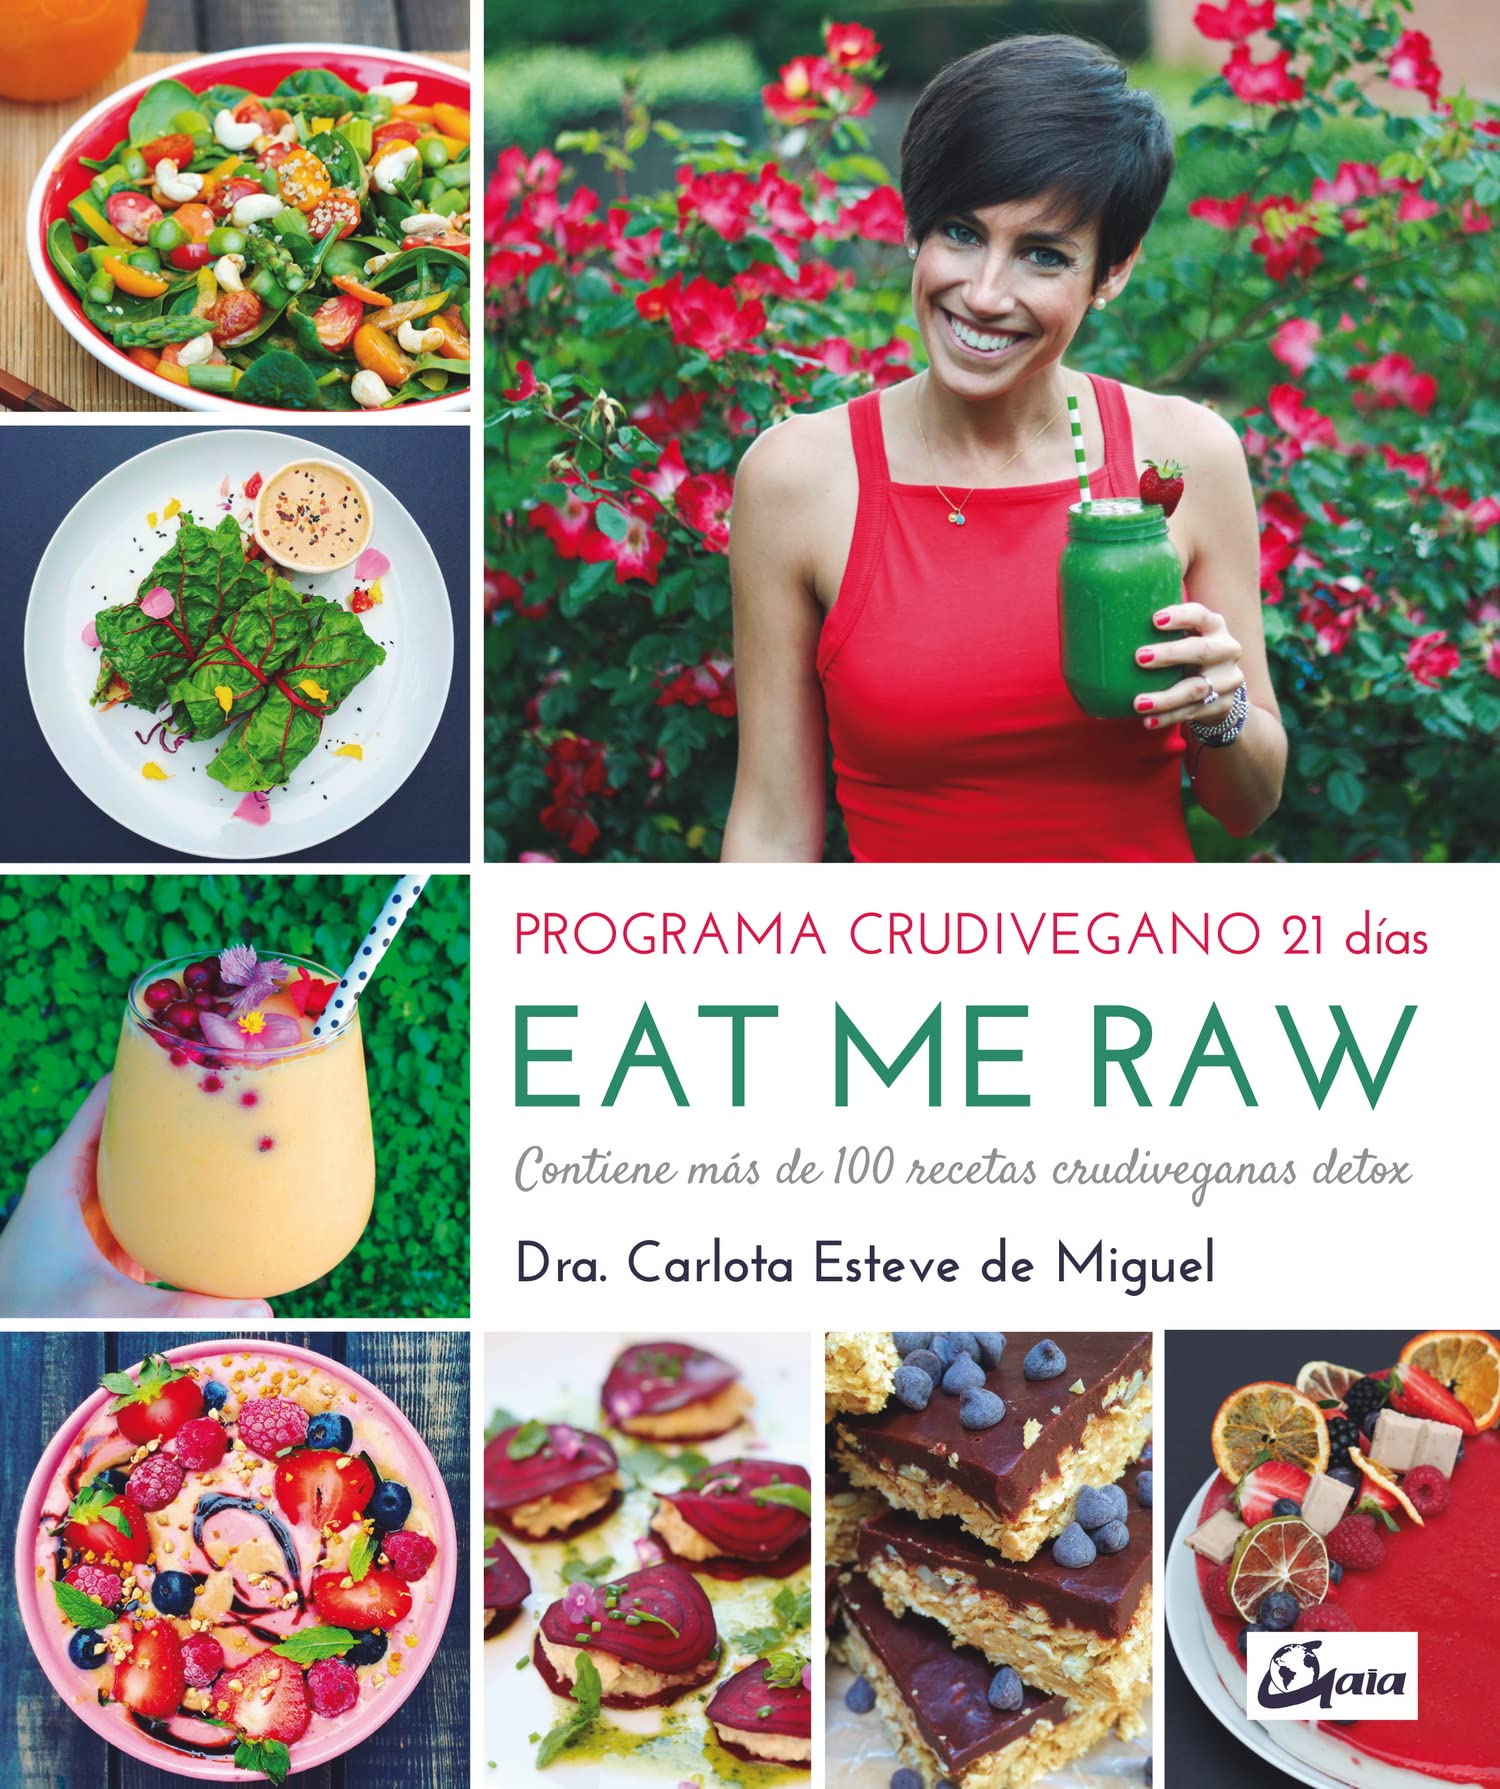 Libro Eat me raw: Programa crudivegano 21 días por Carlota Esteve de Miguel